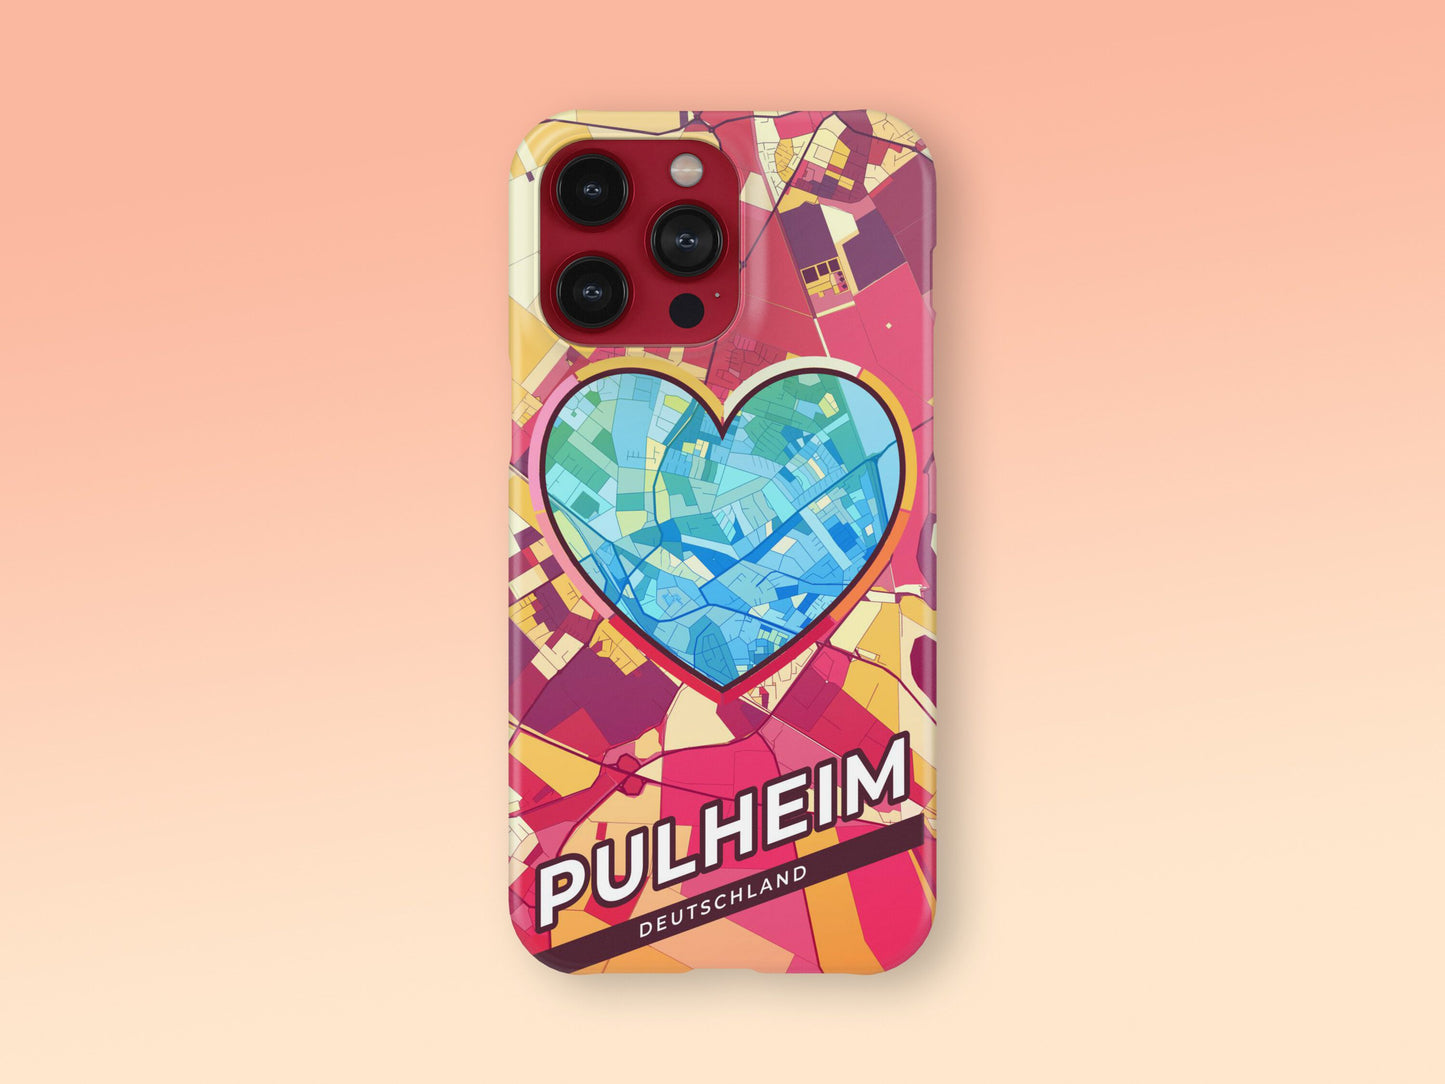 Pulheim Deutschland slim phone case with colorful icon. Birthday, wedding or housewarming gift. Couple match cases. 2